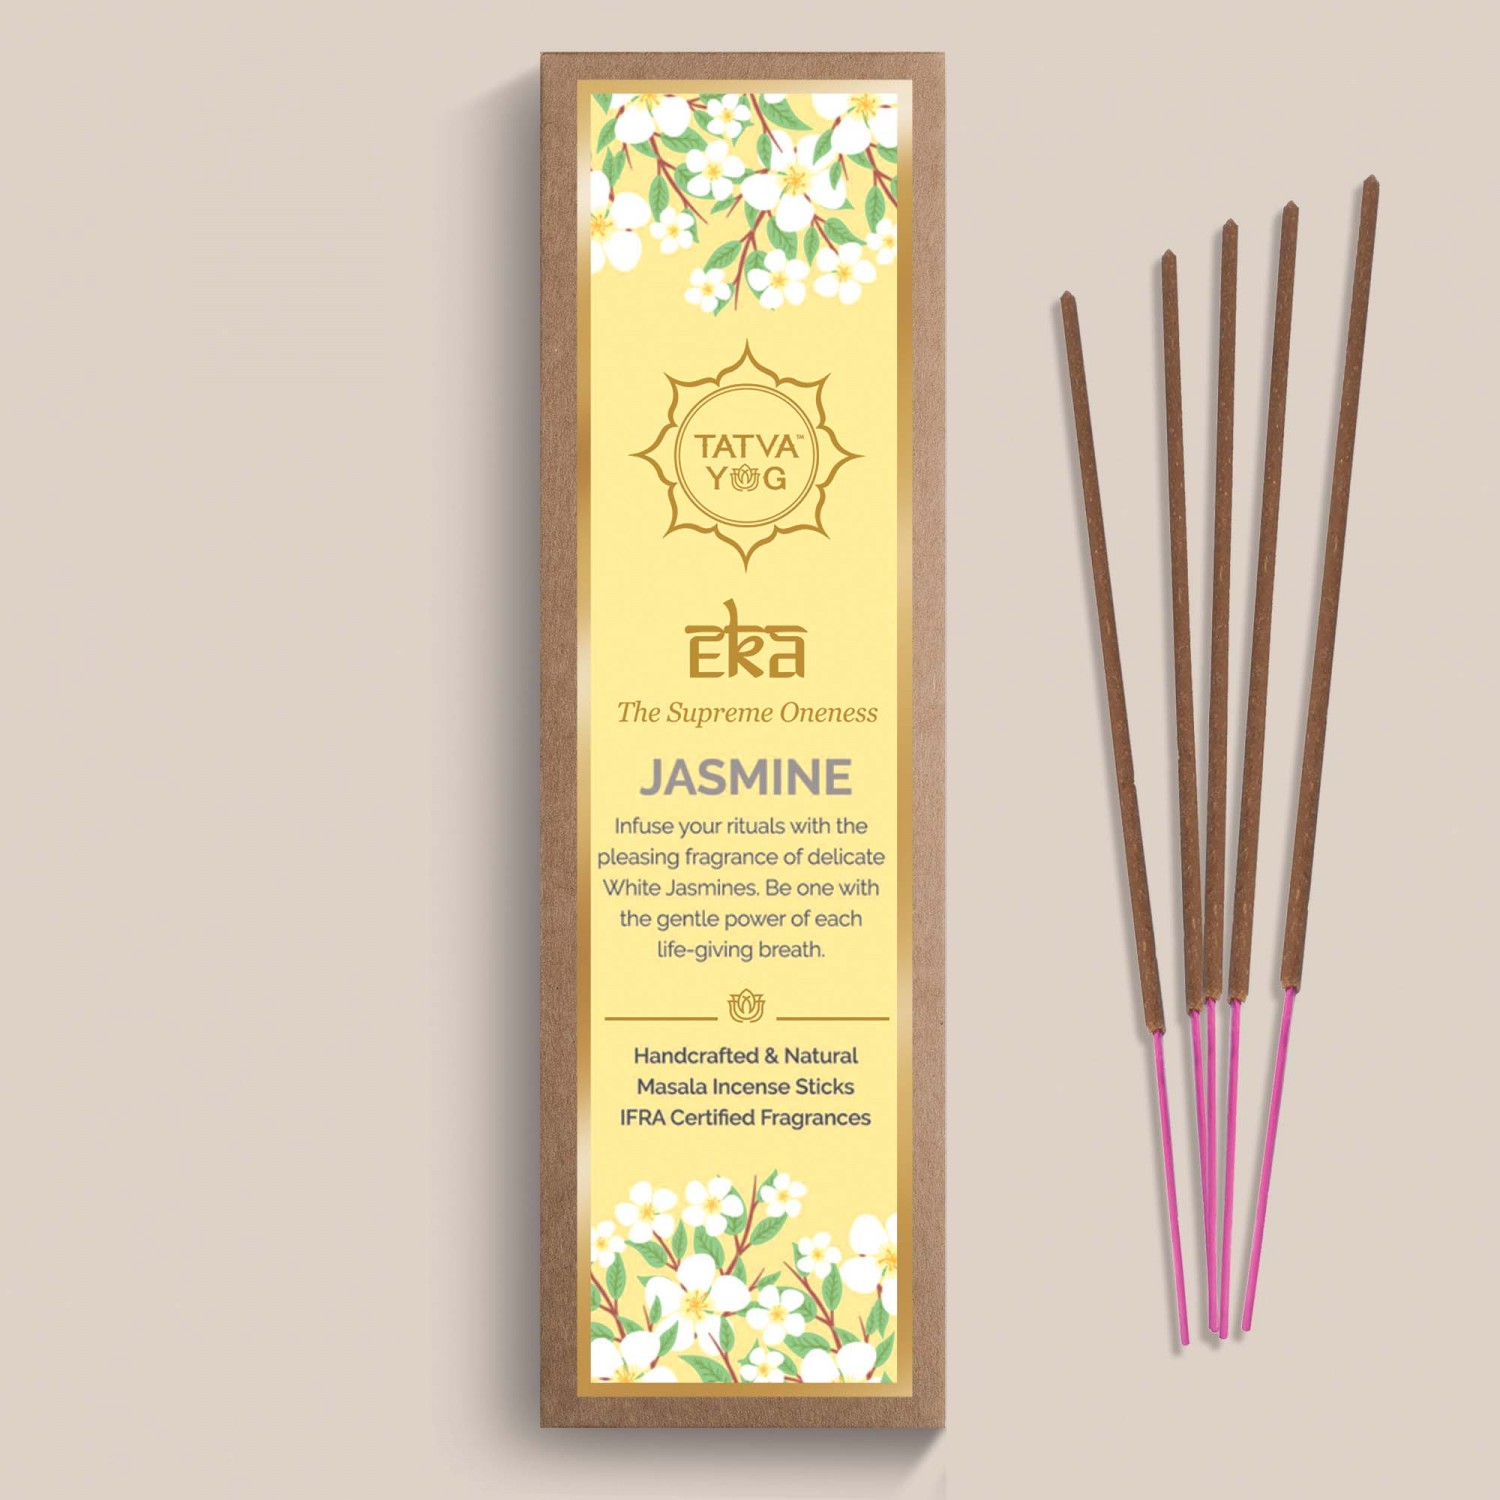 eka---jasmine-handcrafted-&-natural-masala-incense-sticks